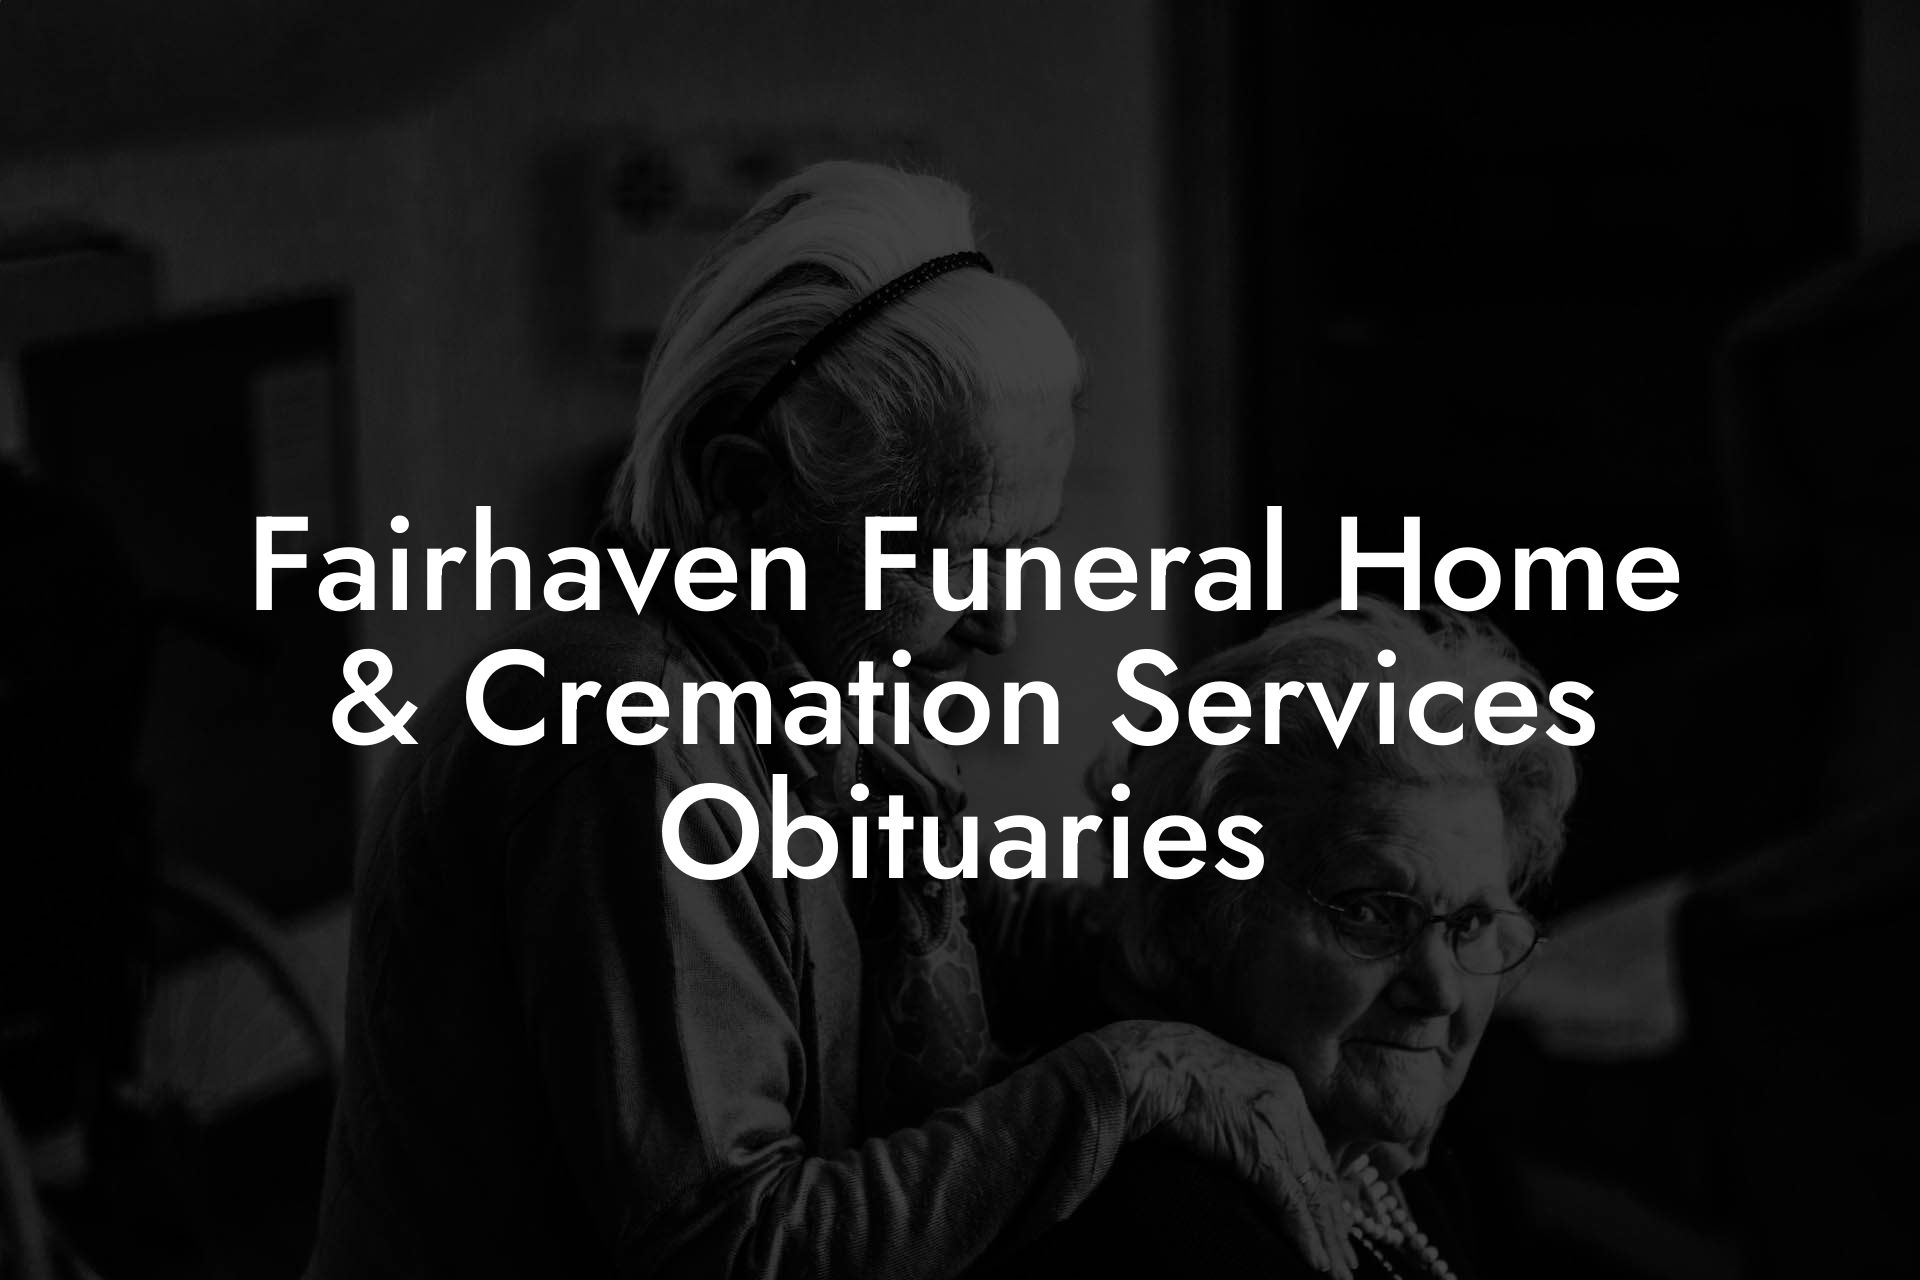 Fairhaven Funeral Home & Cremation Services Obituaries